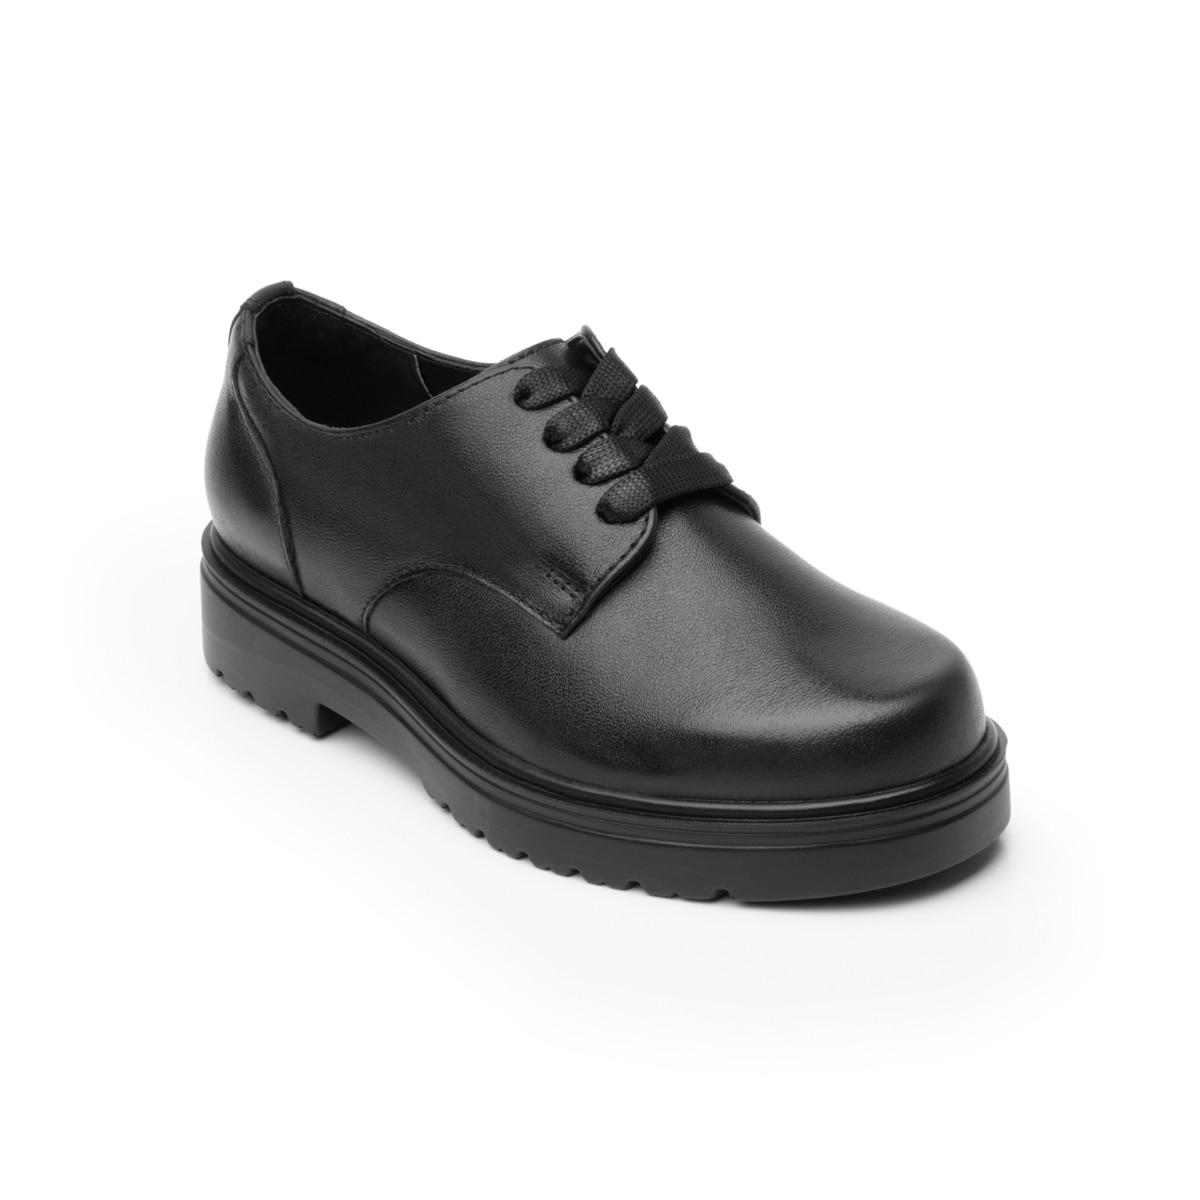 Zapato Escolar Flexi Oxford Liso con Agujetas y Suela Gruesa Niña Estilo 104103 Negro | México Tienda Oficial en Línea